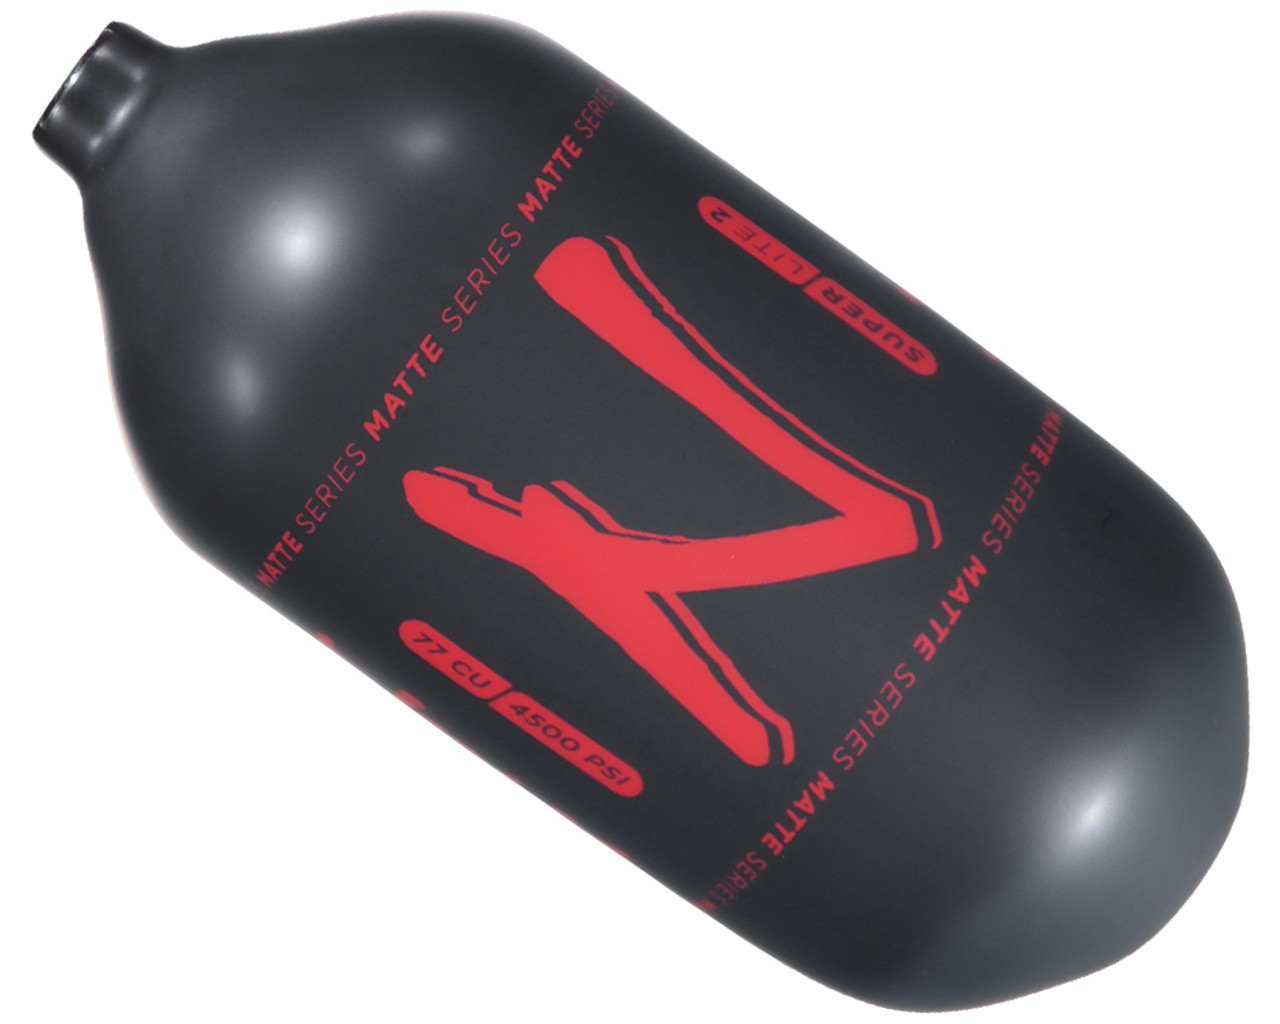 Ninja SL2 Carbon Fiber Air Tank (Bottle Only) - 77/4500 - Matte Black/Red